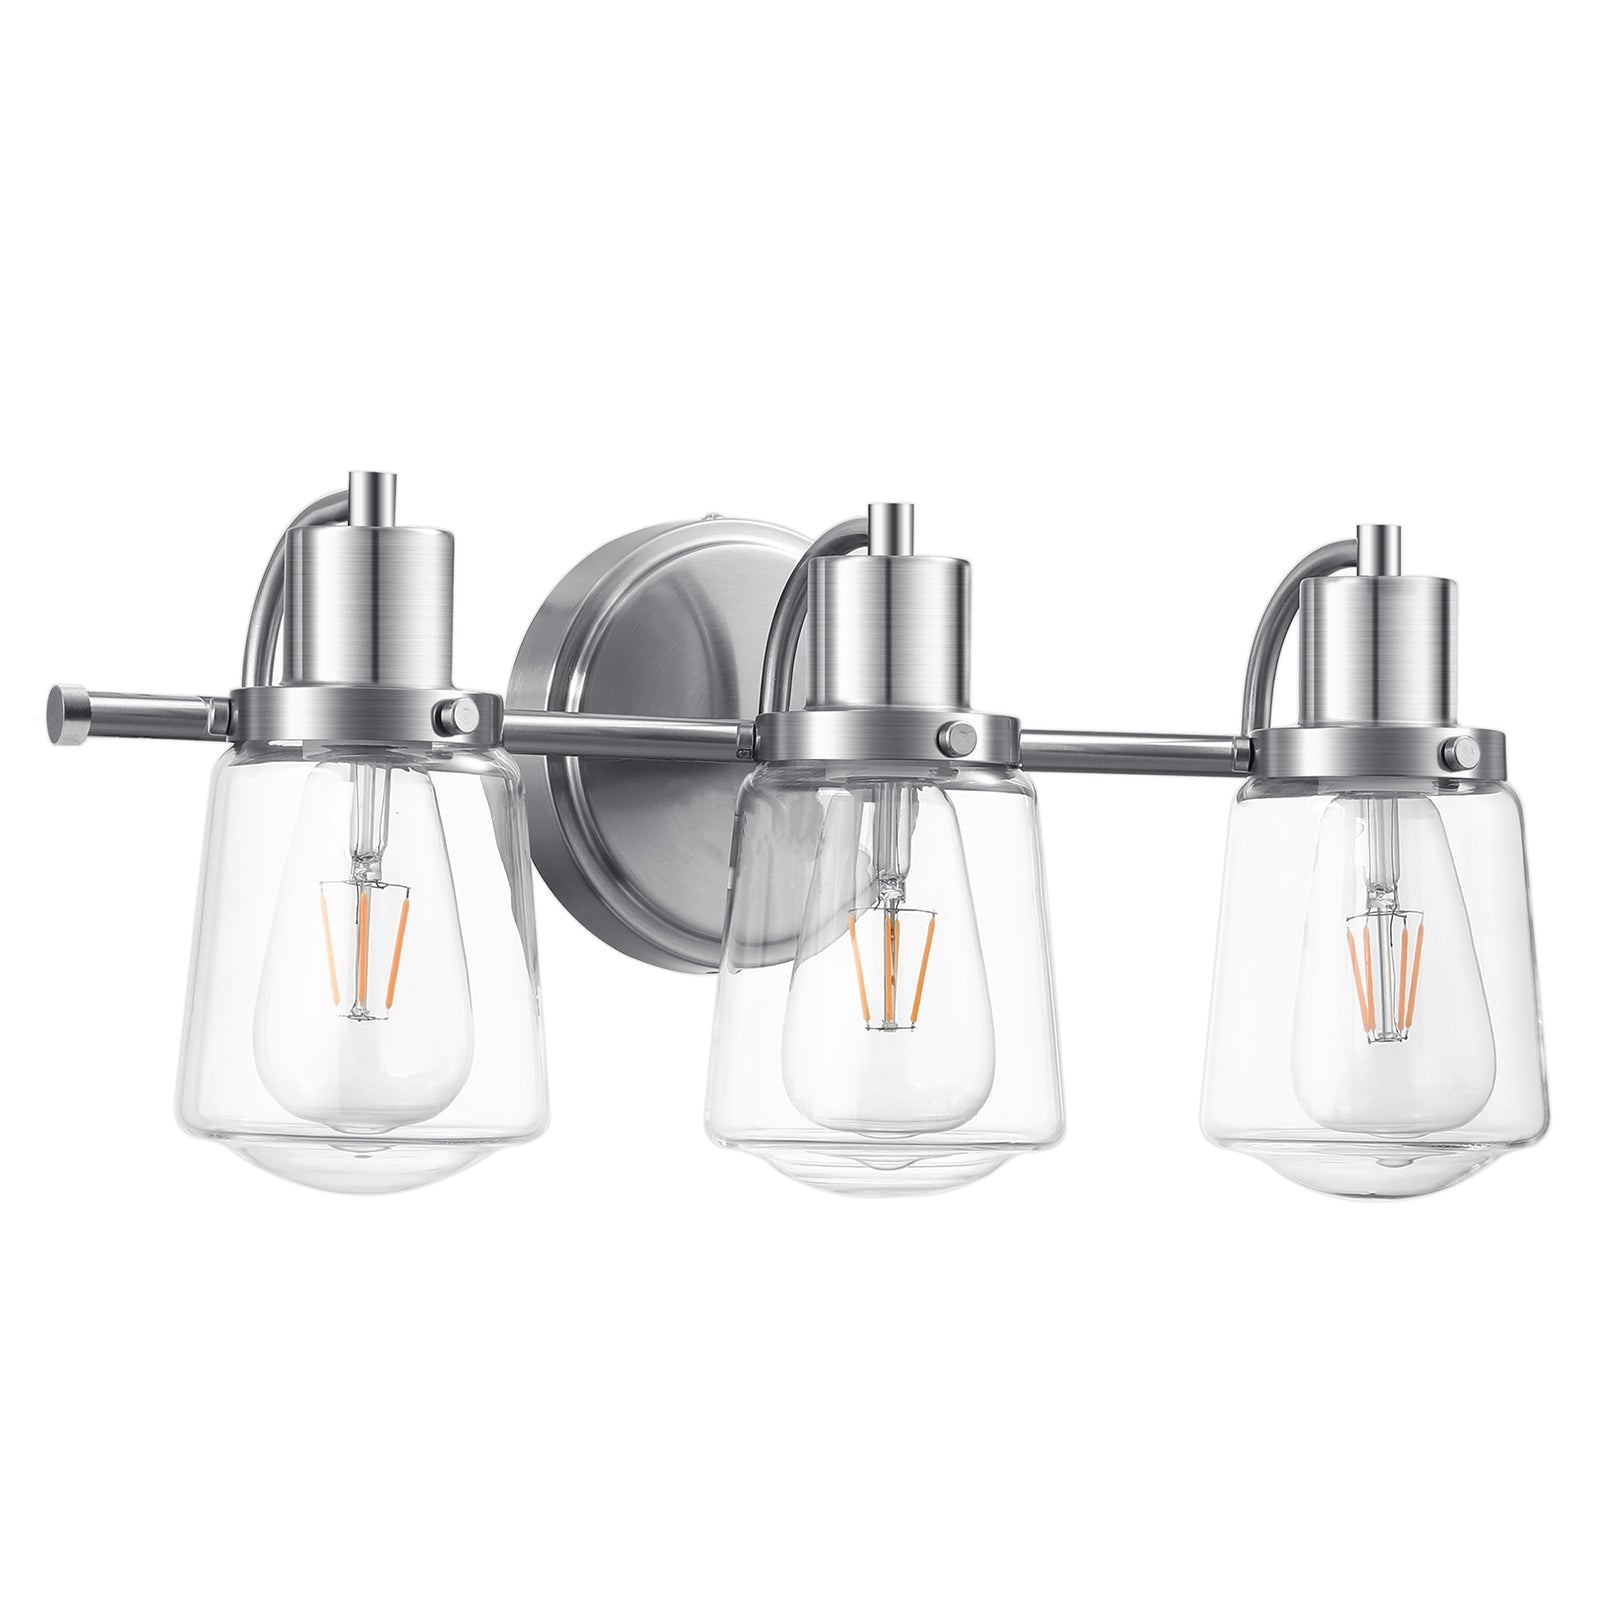 TaoTronics Design Glass Vanity Lighting Fixtures, 3-Light Vanity Light, Bathroom Lighting with Clear Glass Lampshade